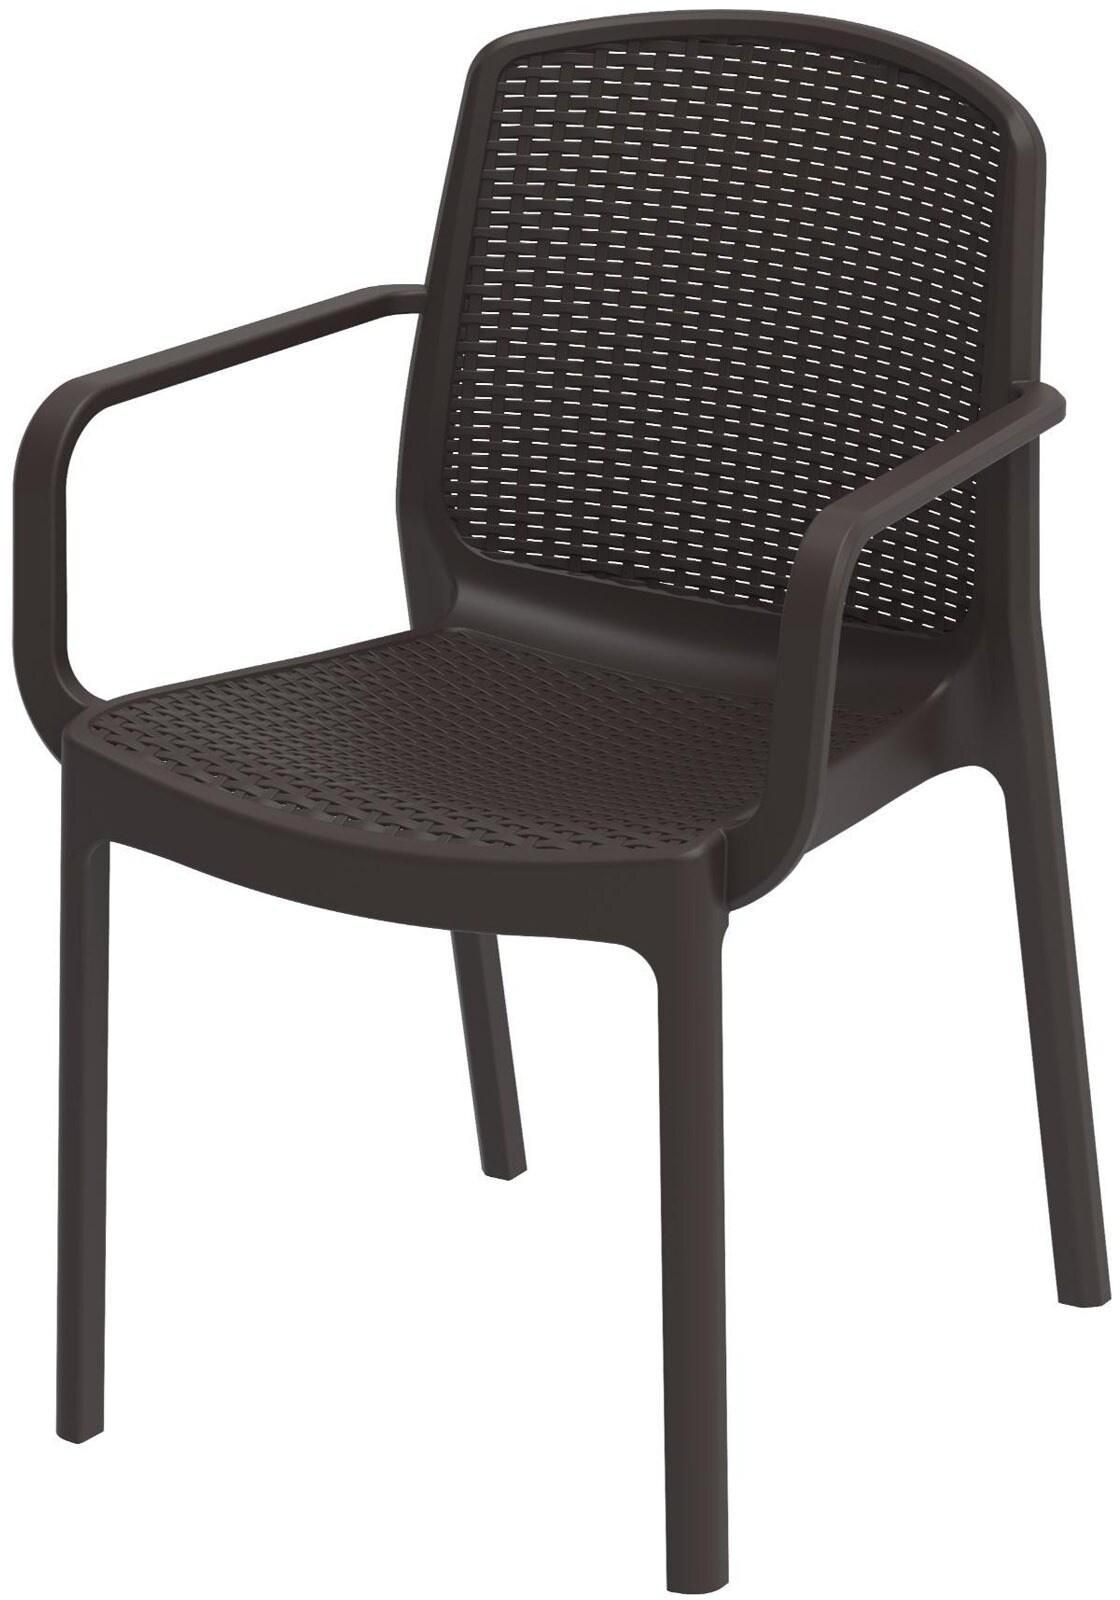 Cosmoplast Cedarattan Arm Chair Dark Brown